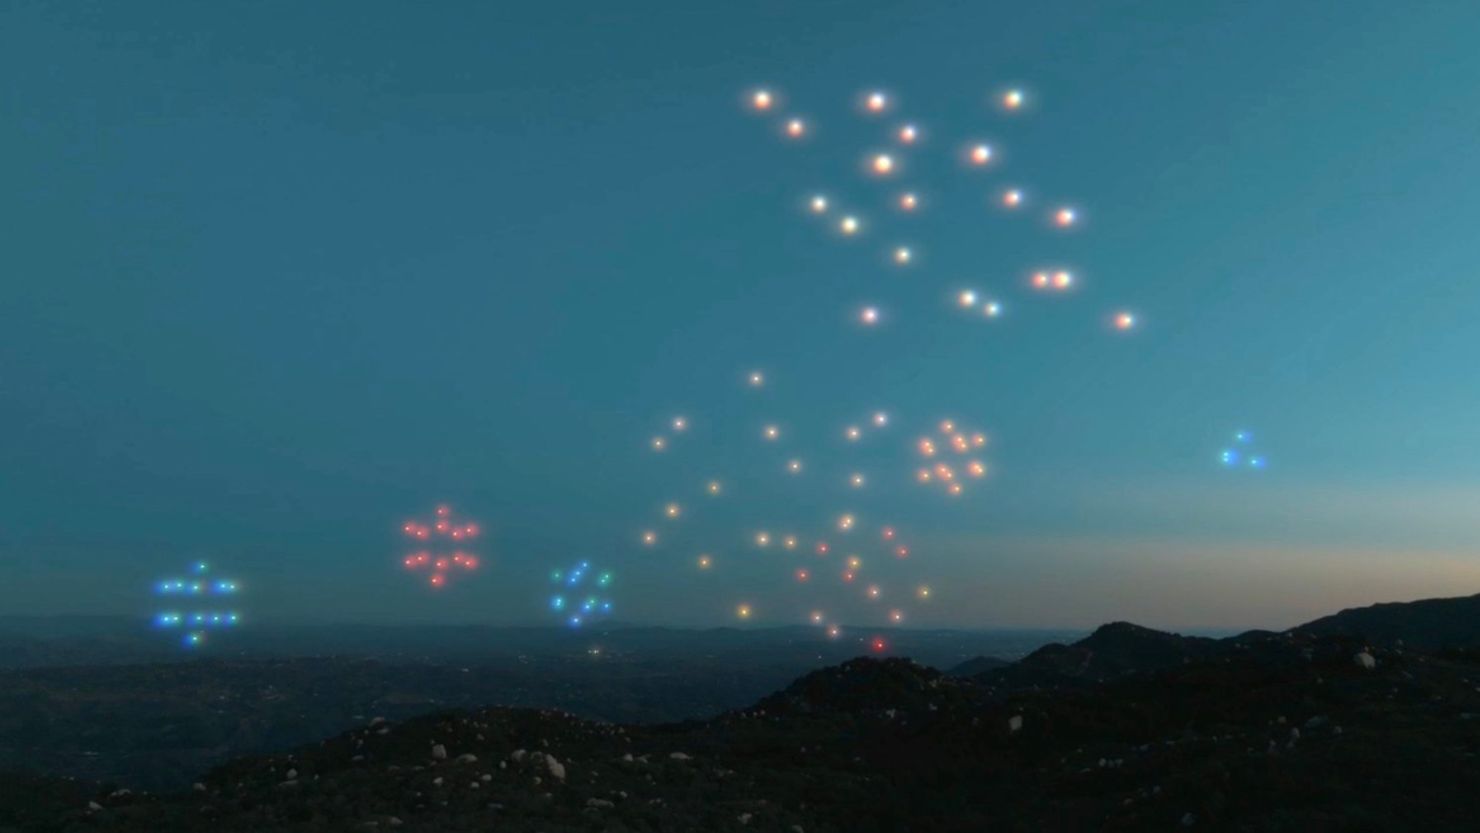 Video of drone light show illuminating night sky goes viral